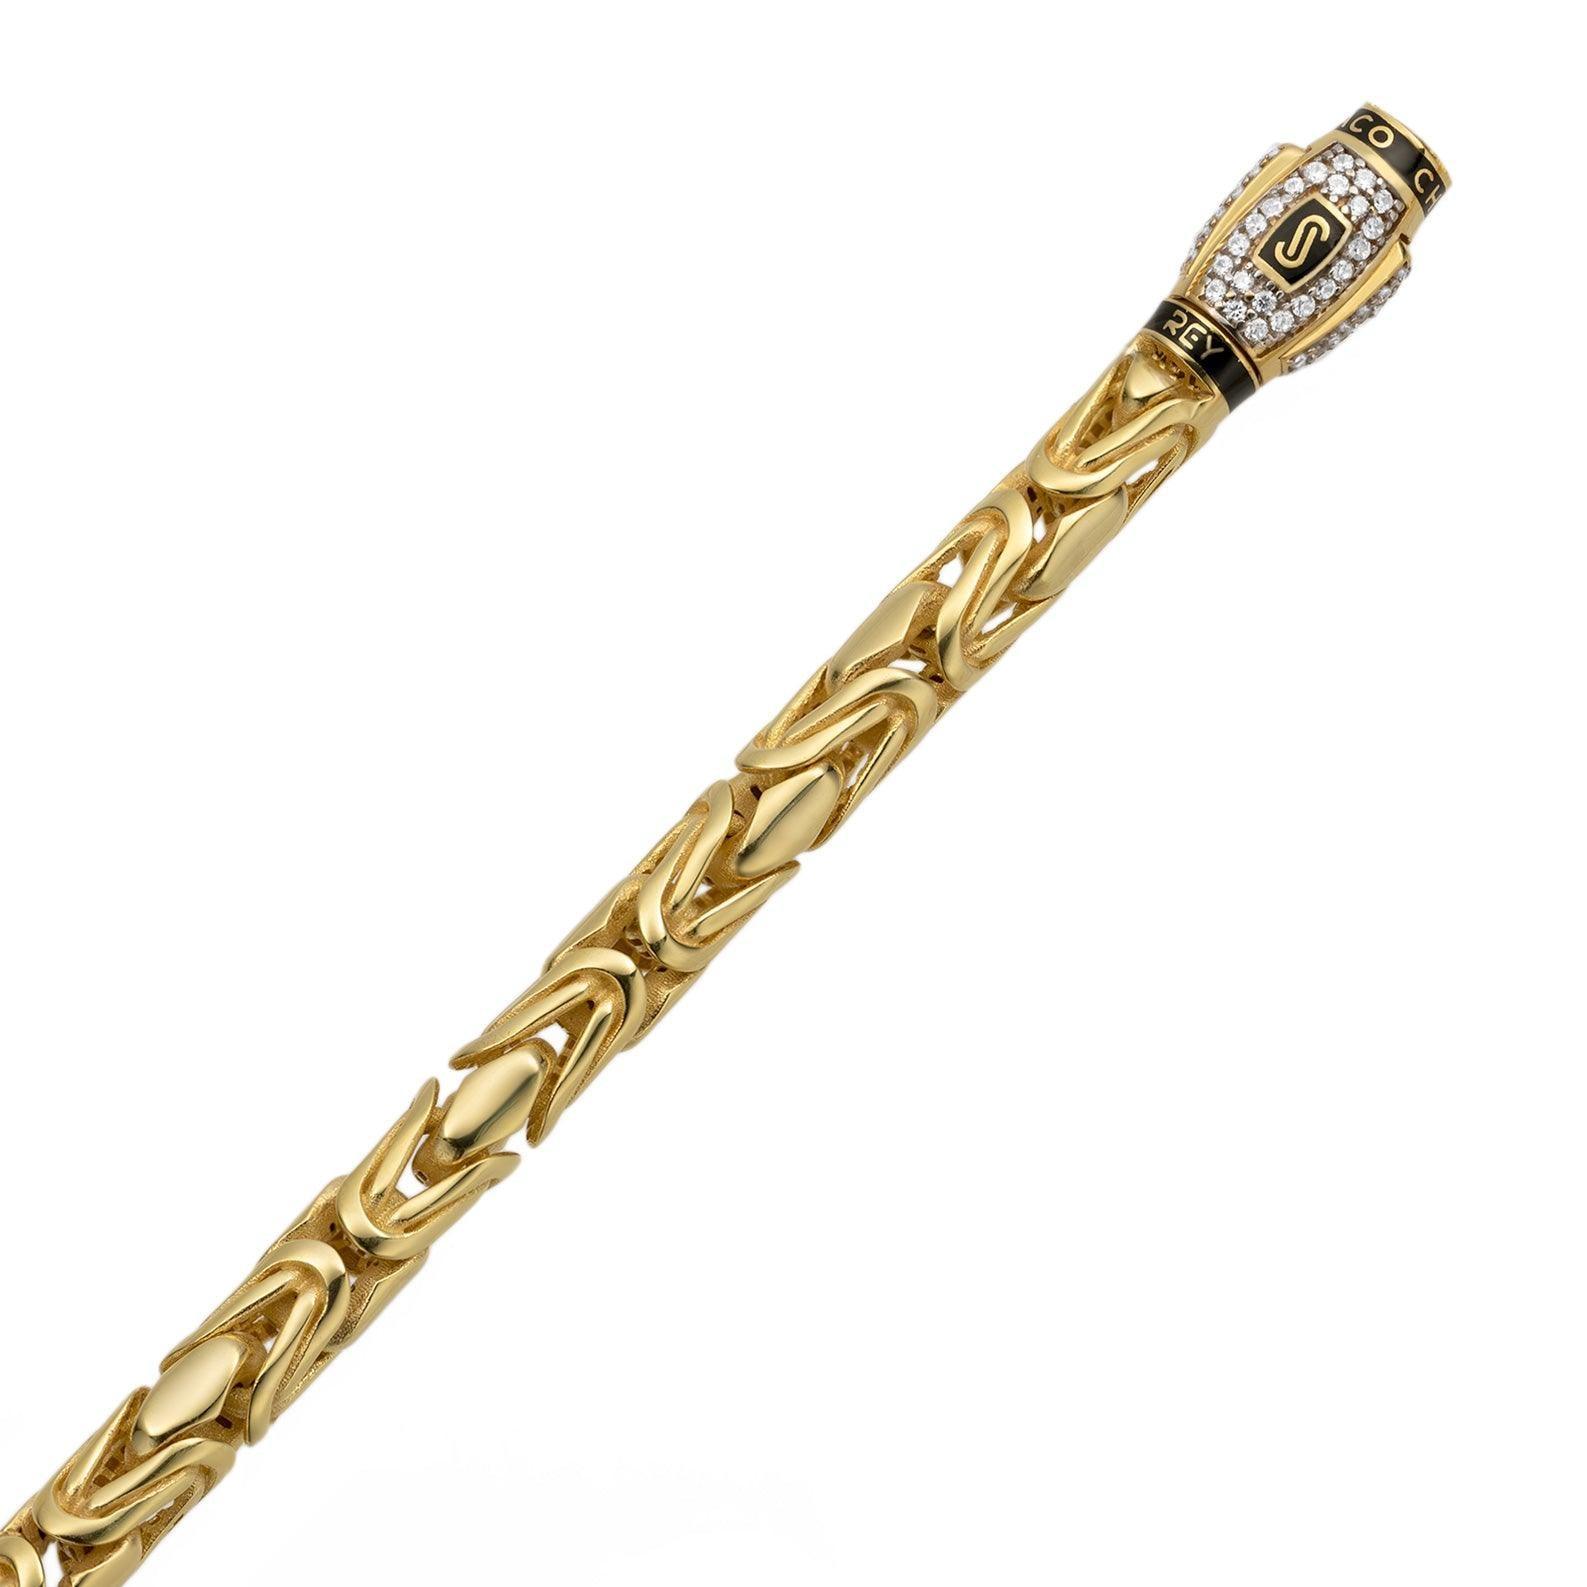 Golden Brass Lion Bracelet Chain With S Lock